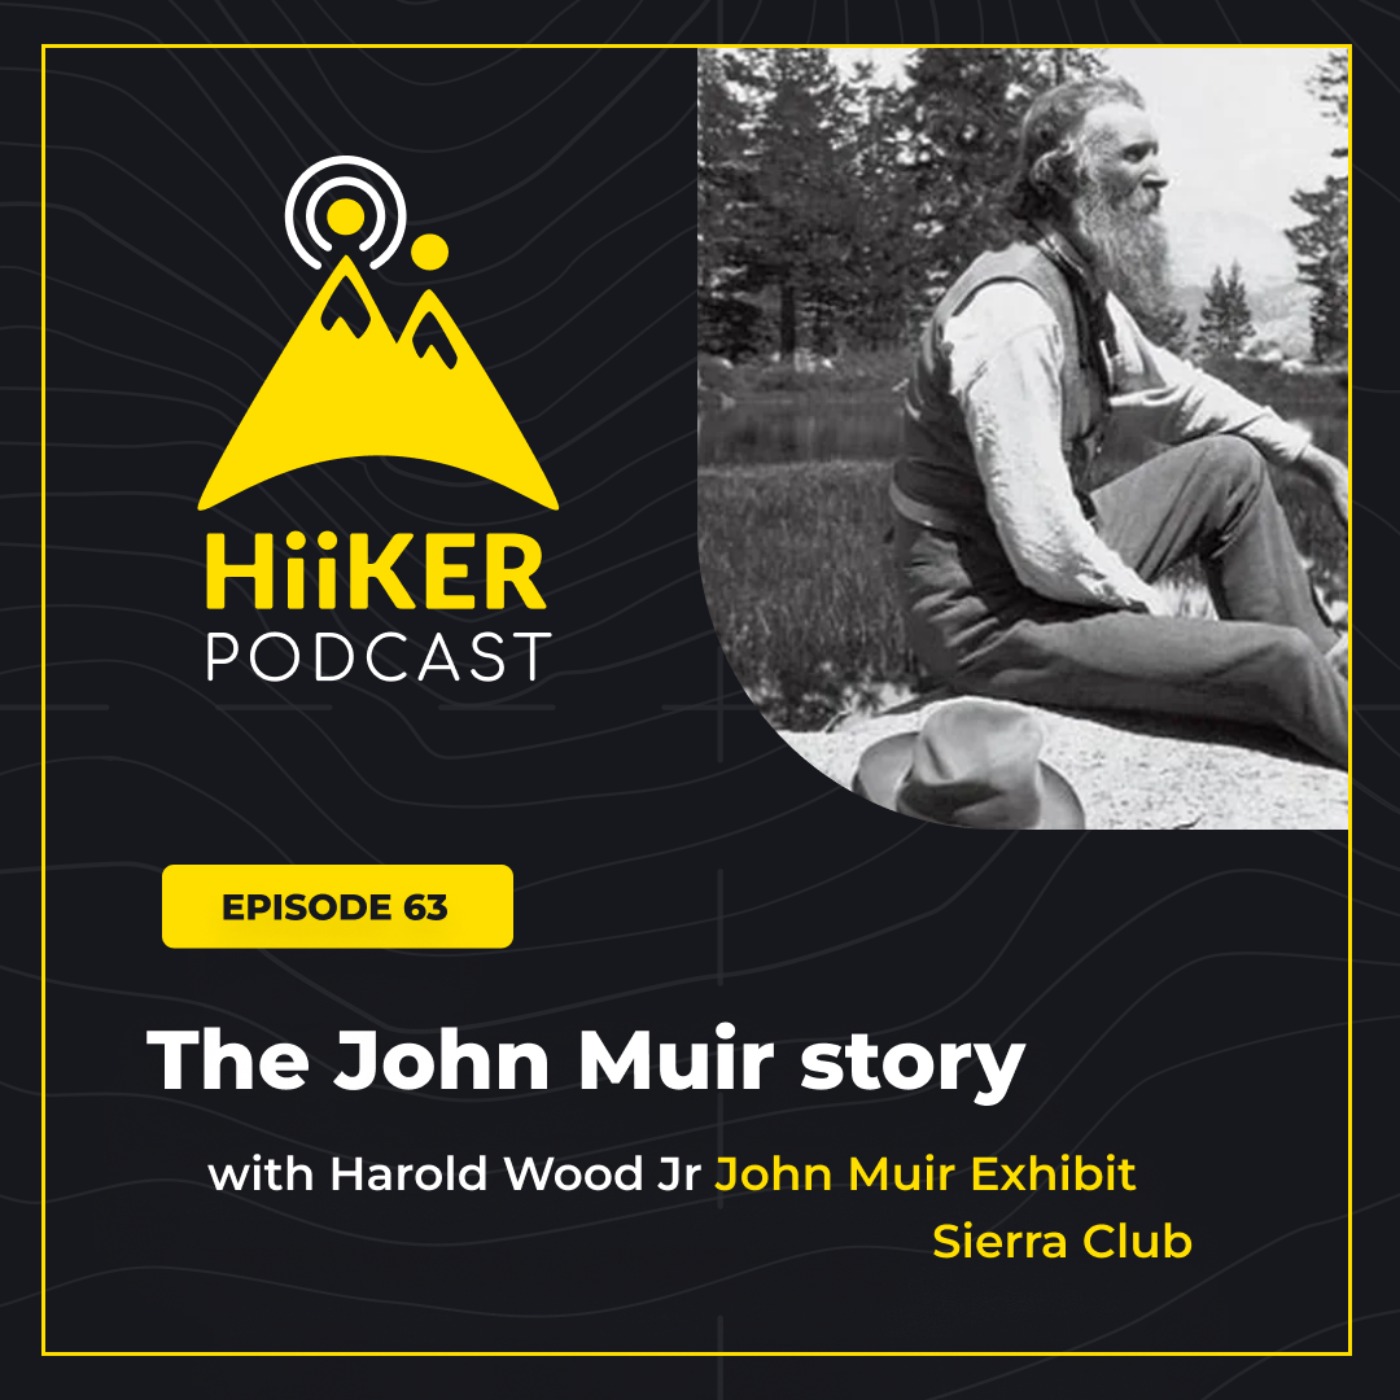 The John Muir story w/ Harold Wood Jr - Sierra Club JM Exhibition